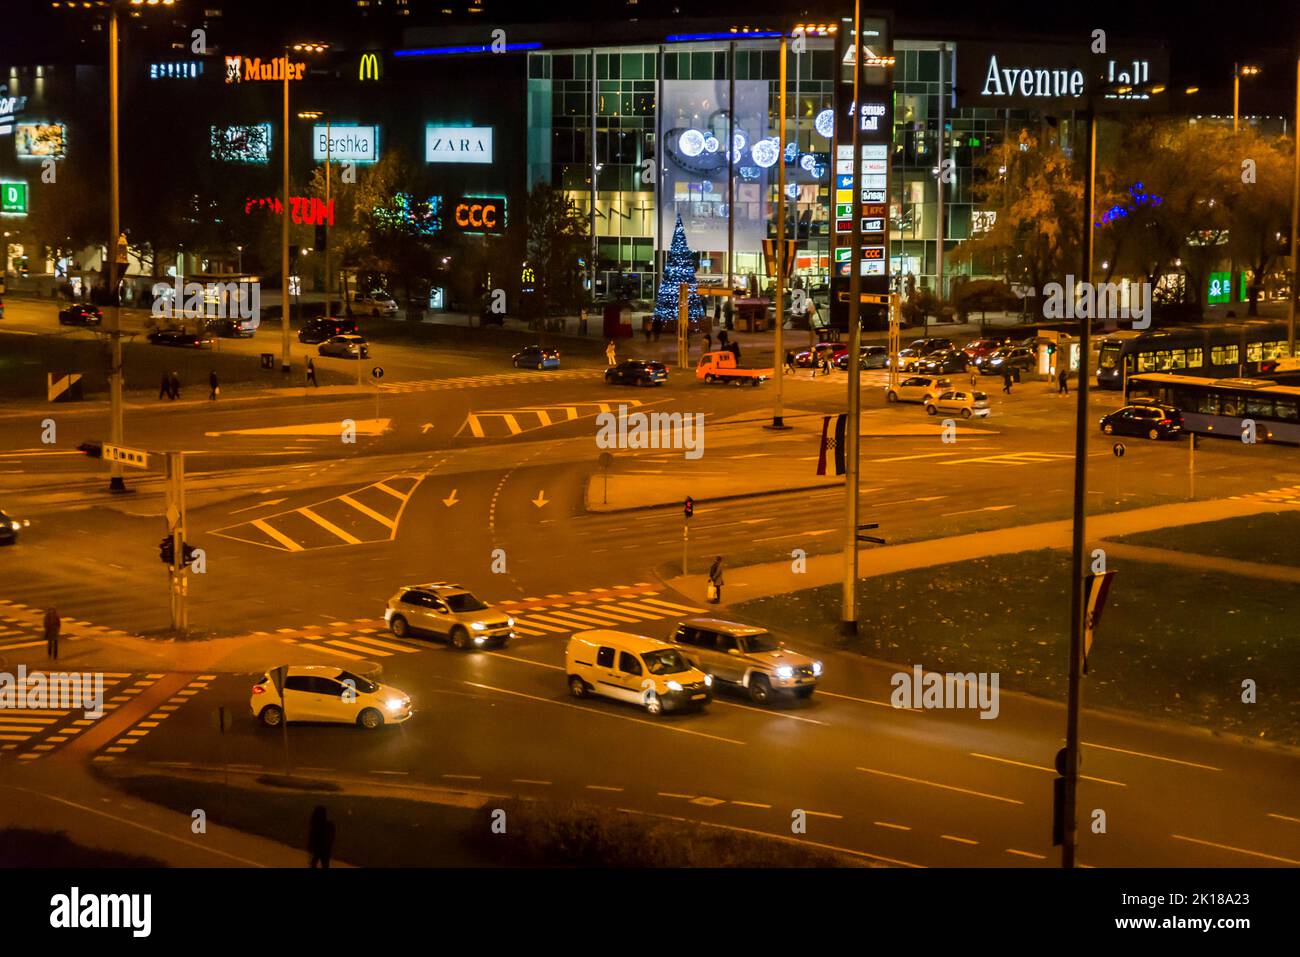 Crossroads in front of Avenue Mall shopping centre at night, Zagreb, Croatia Stock Photo